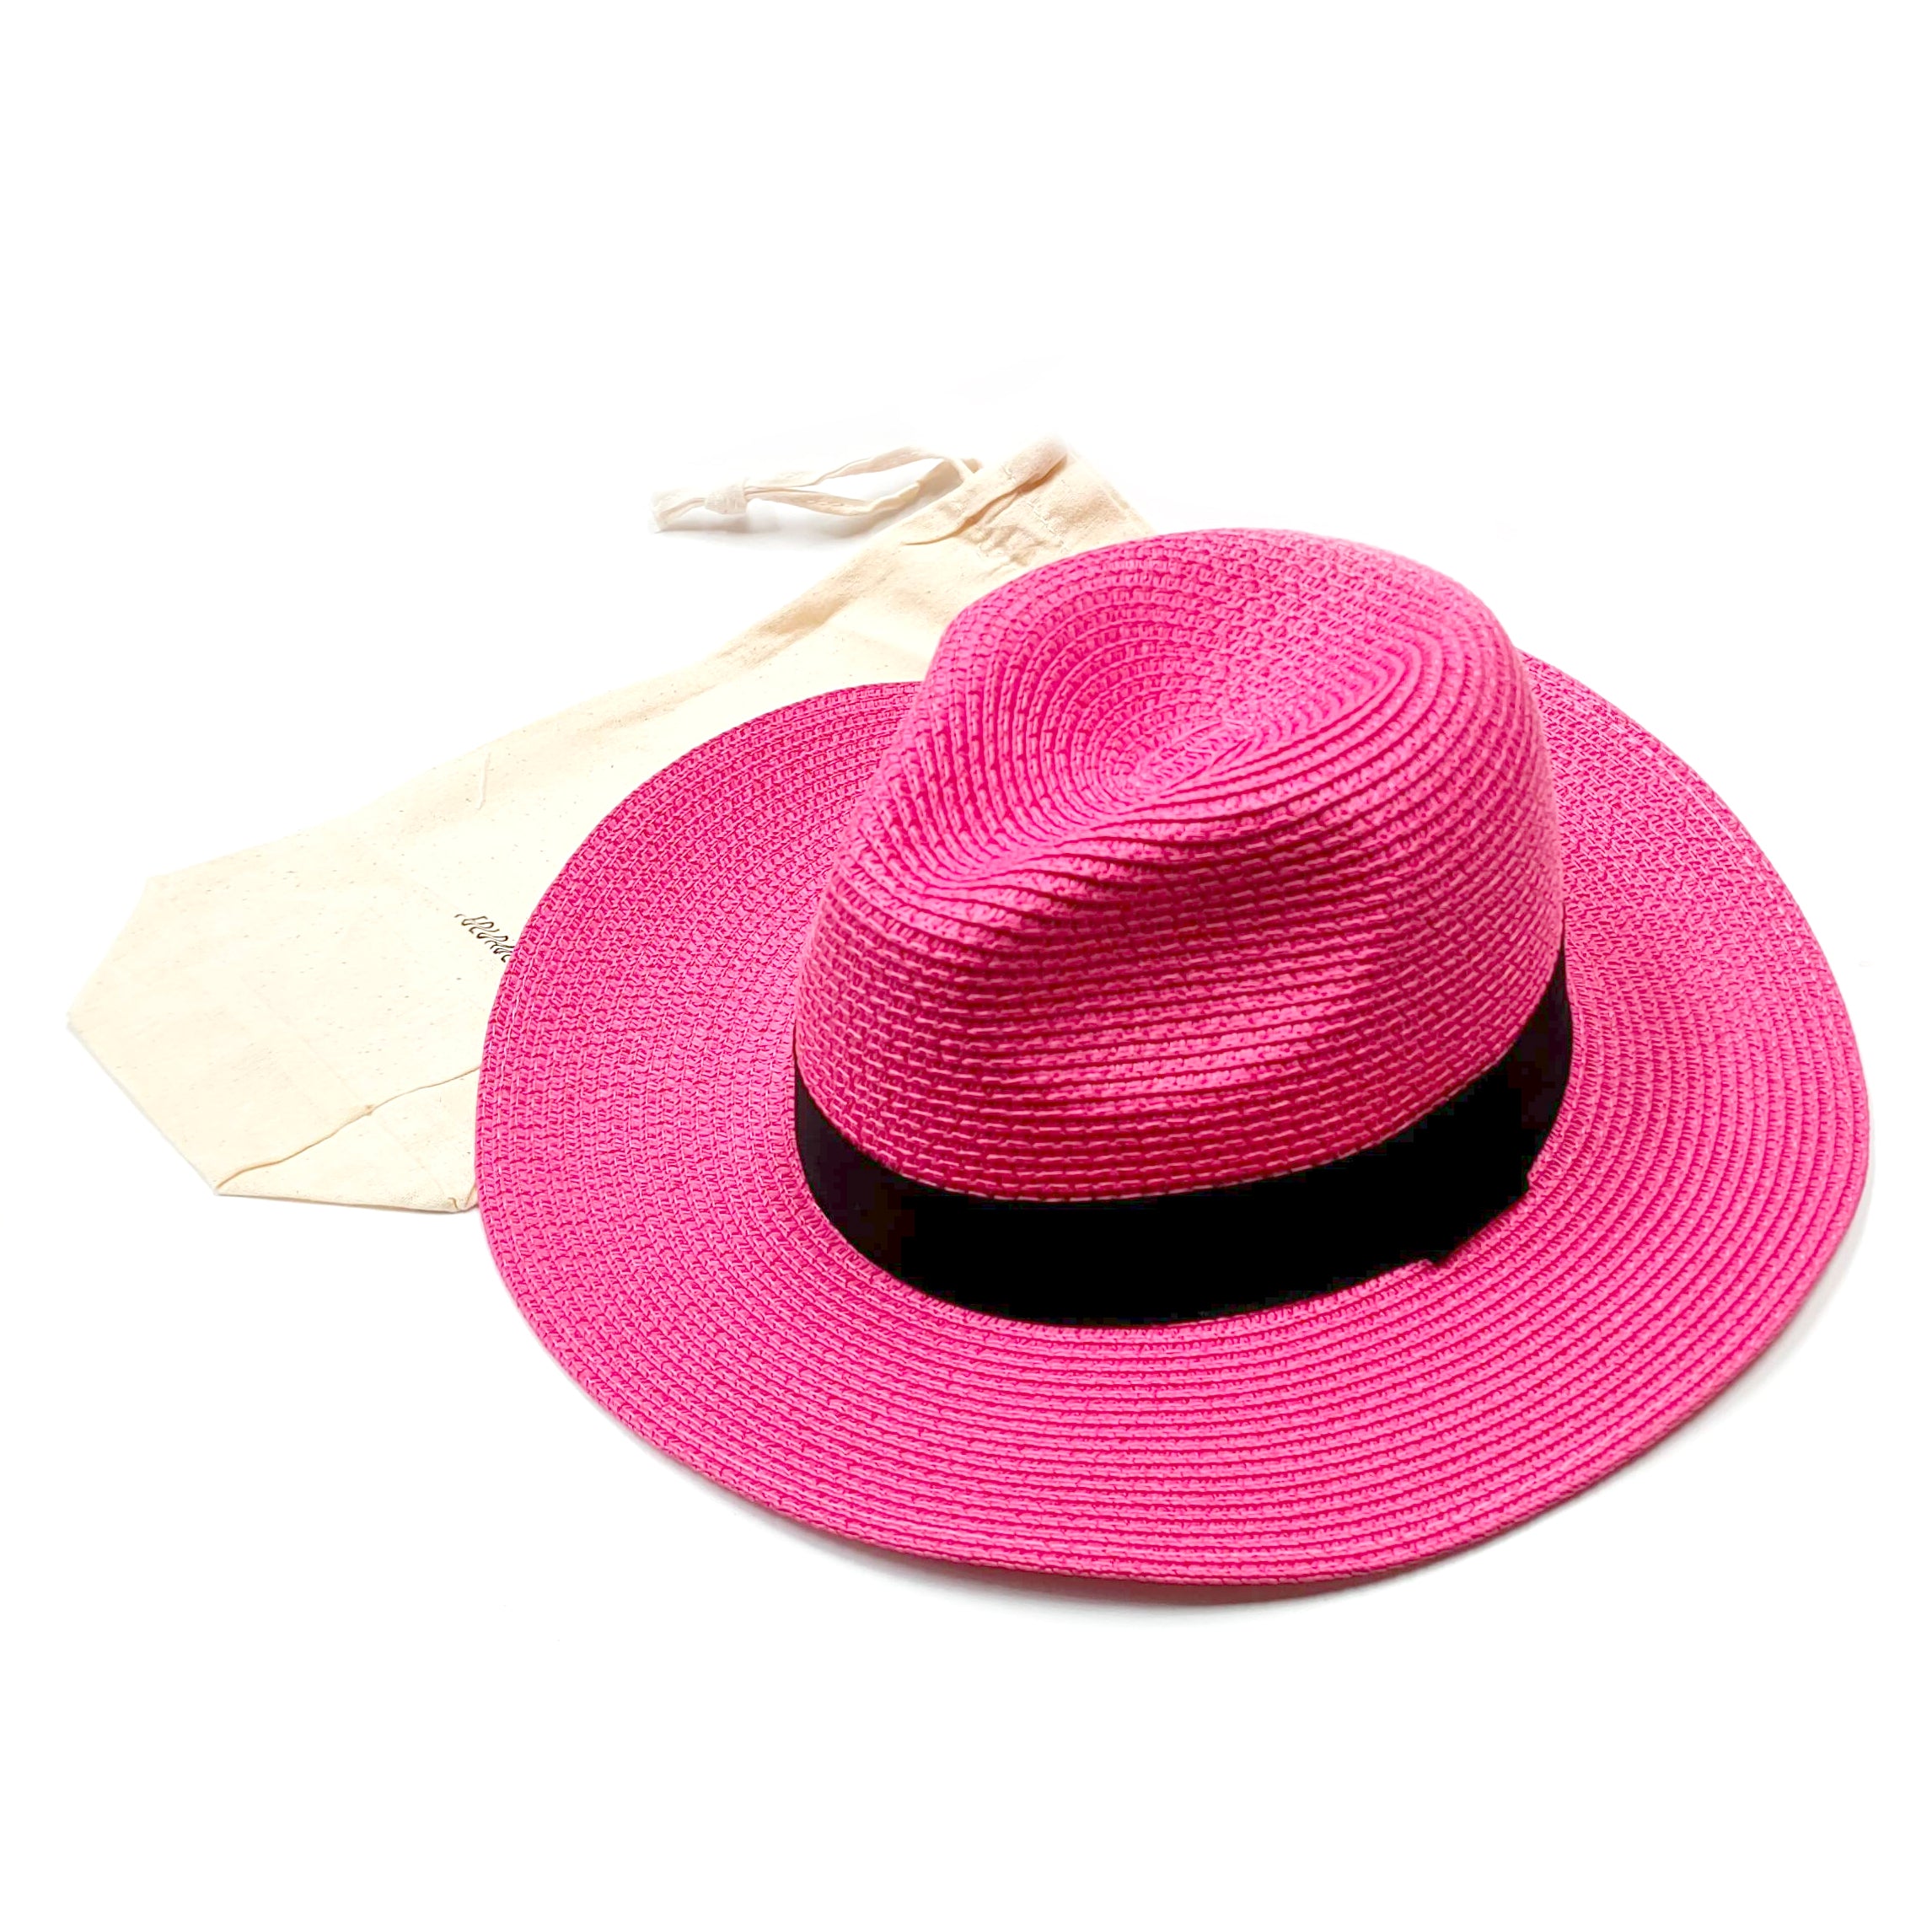 Folding Panama Style Travel Sun Hat - Bright Pink (57cm)